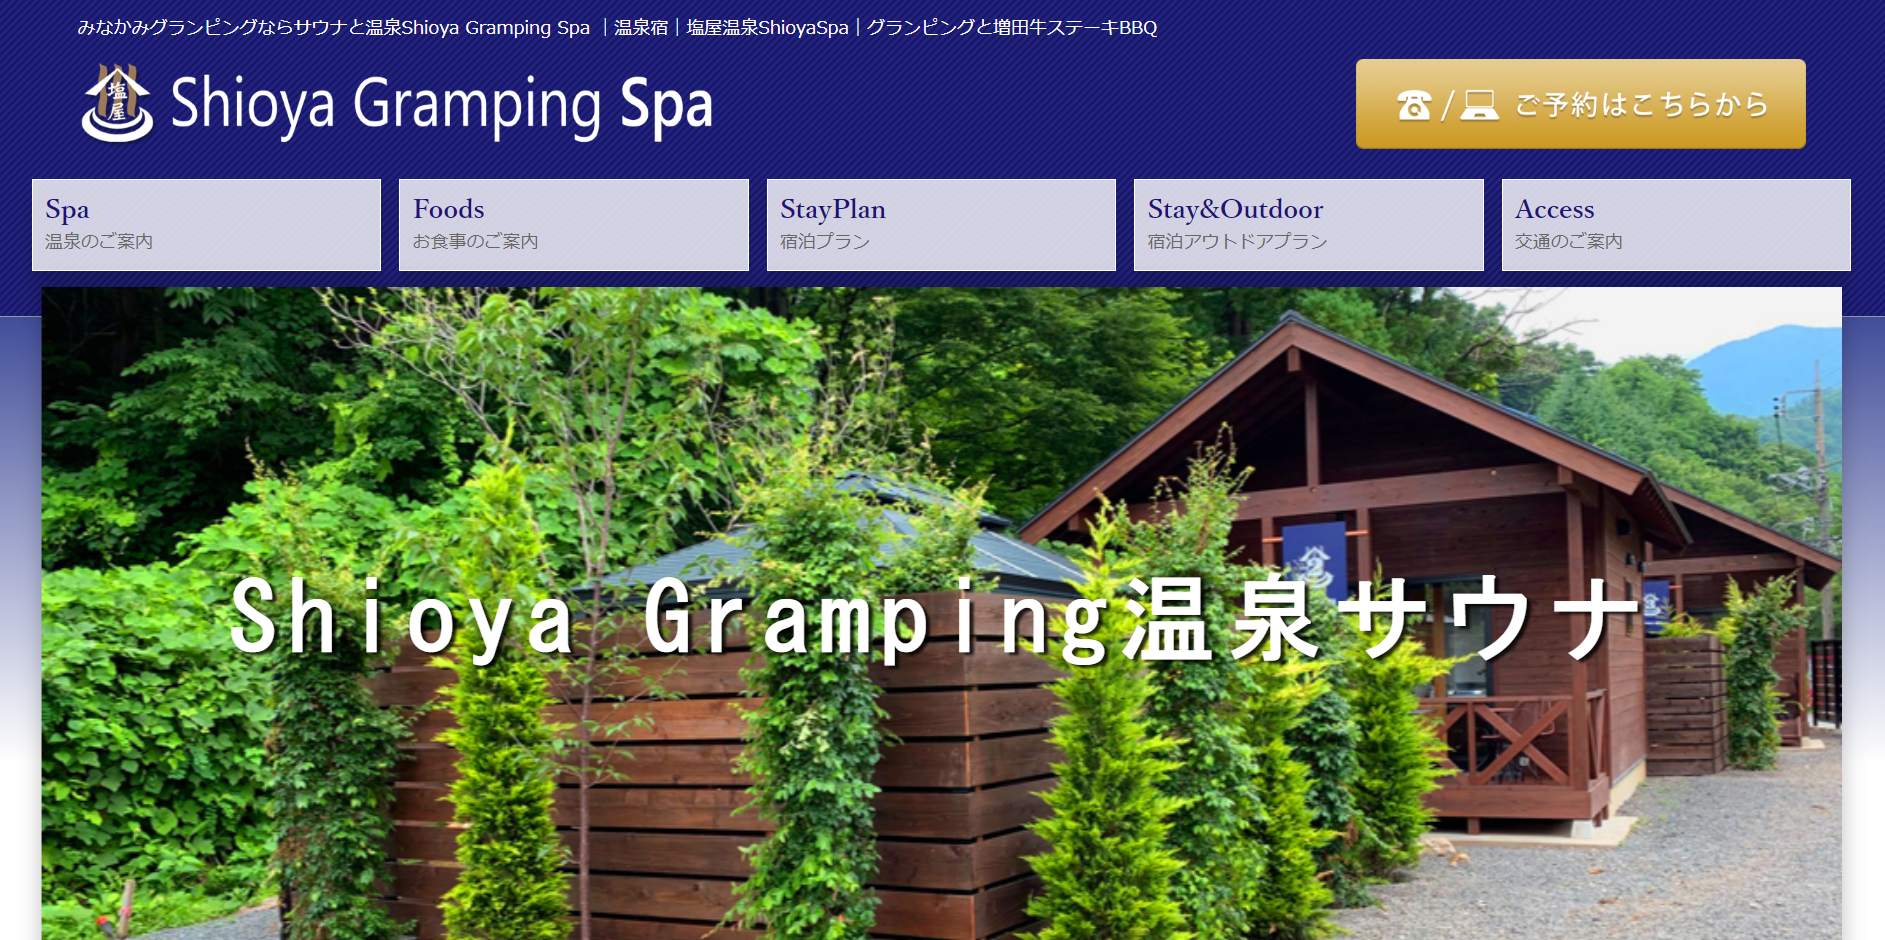 Shioya Gramping Spa